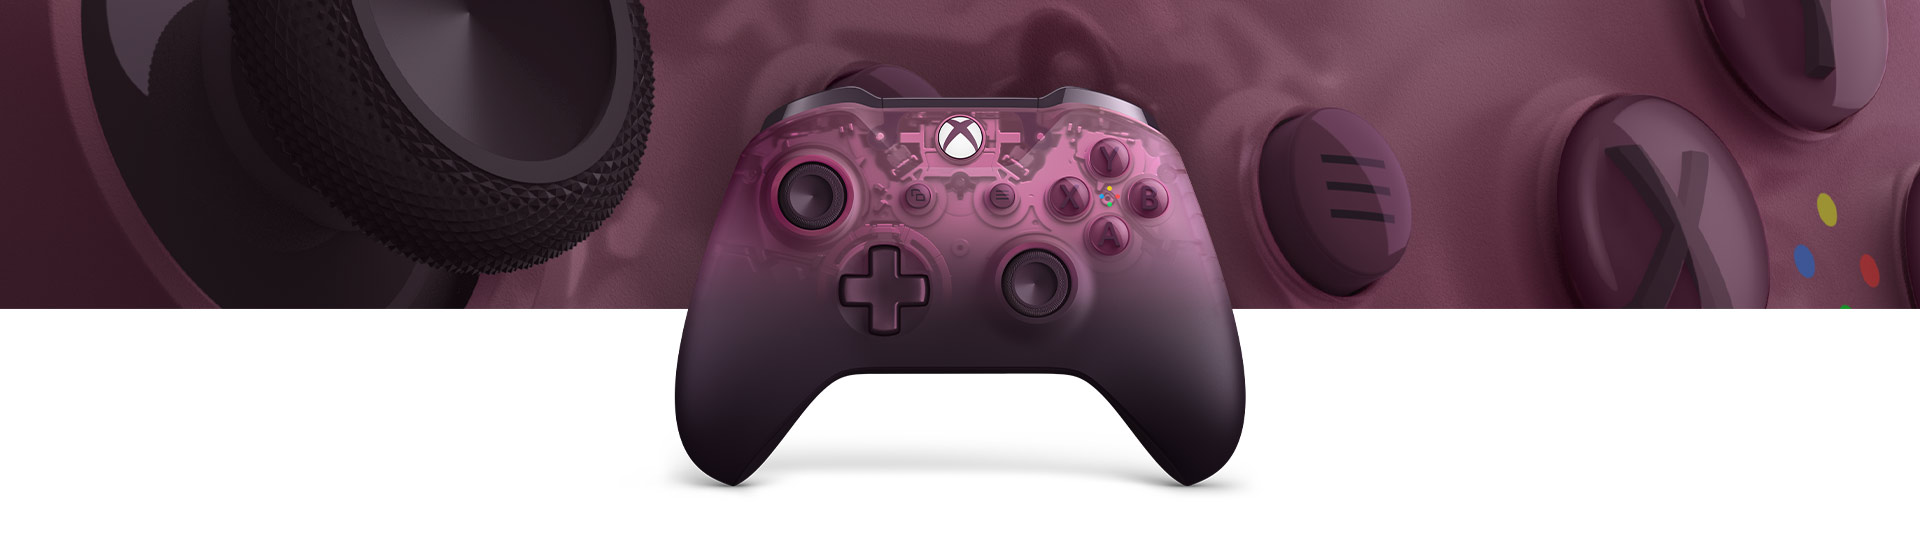 Xbox Wireless Controller – Phantom Magenta Special Edition with a closeup of controller surface texture